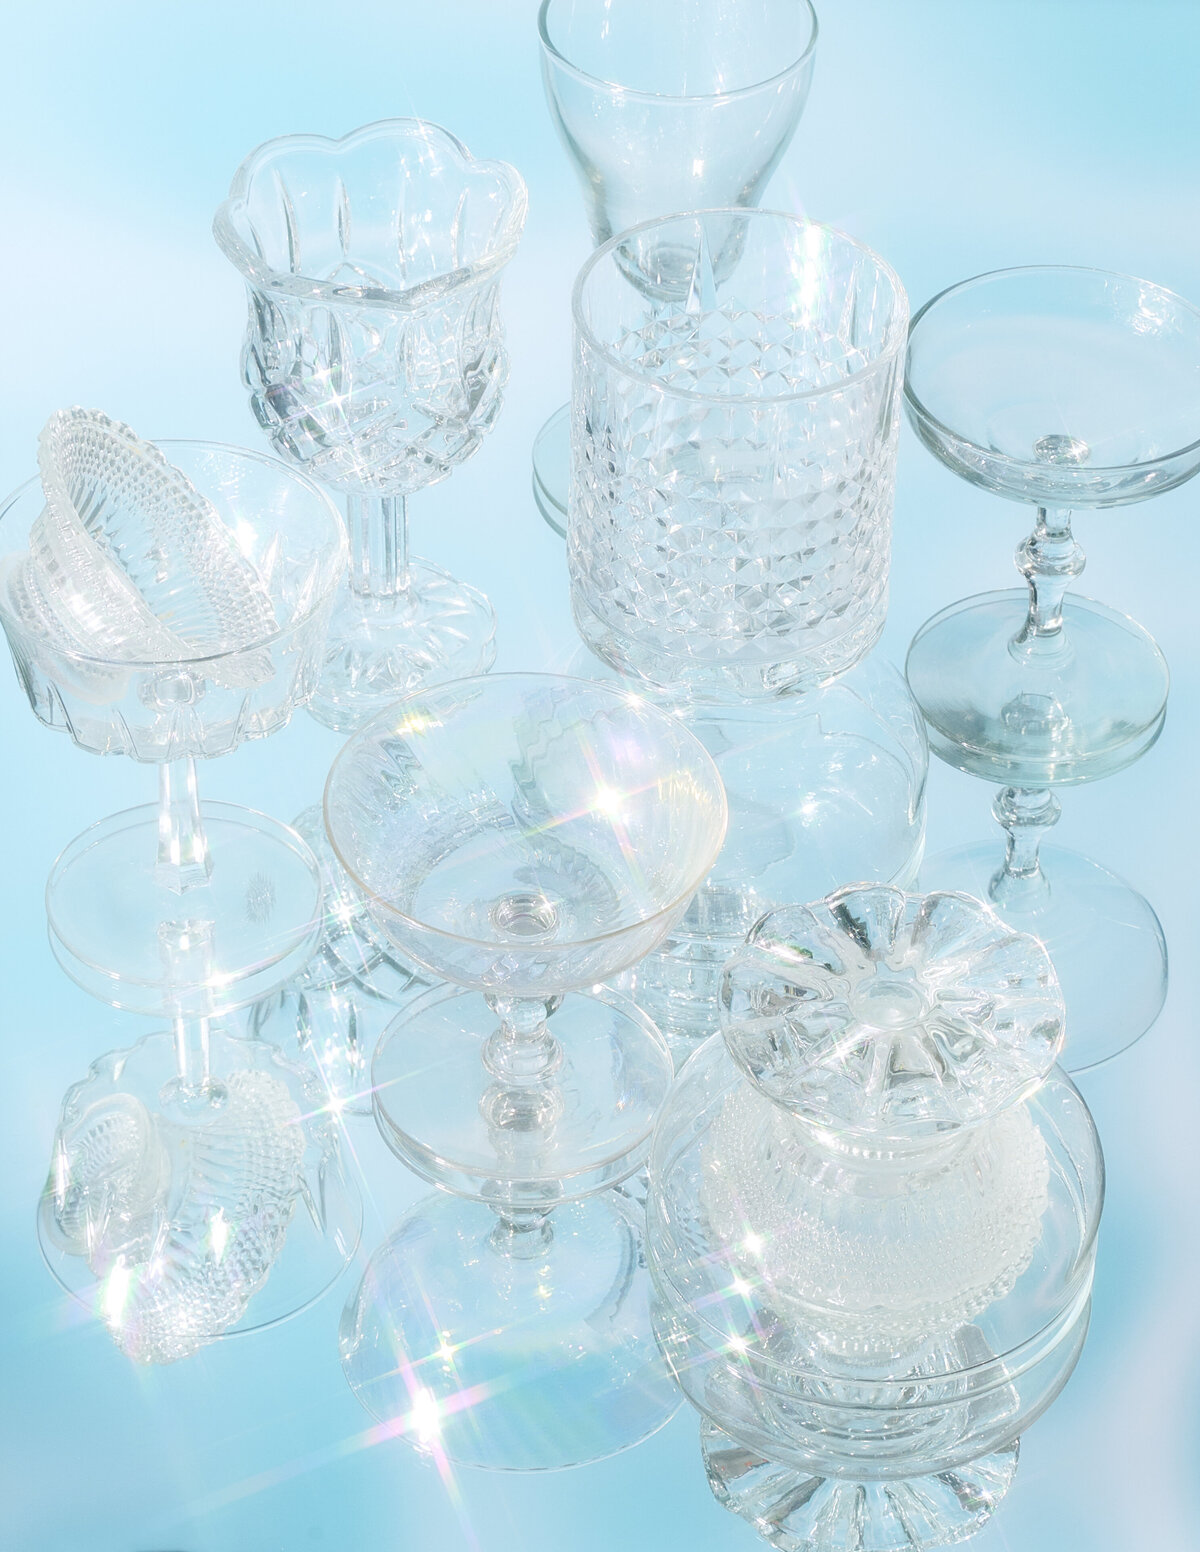 los-angeles-product-photographer-lindsay-kreighbaum-glassware-mirror-photography-sparkles-glass-1